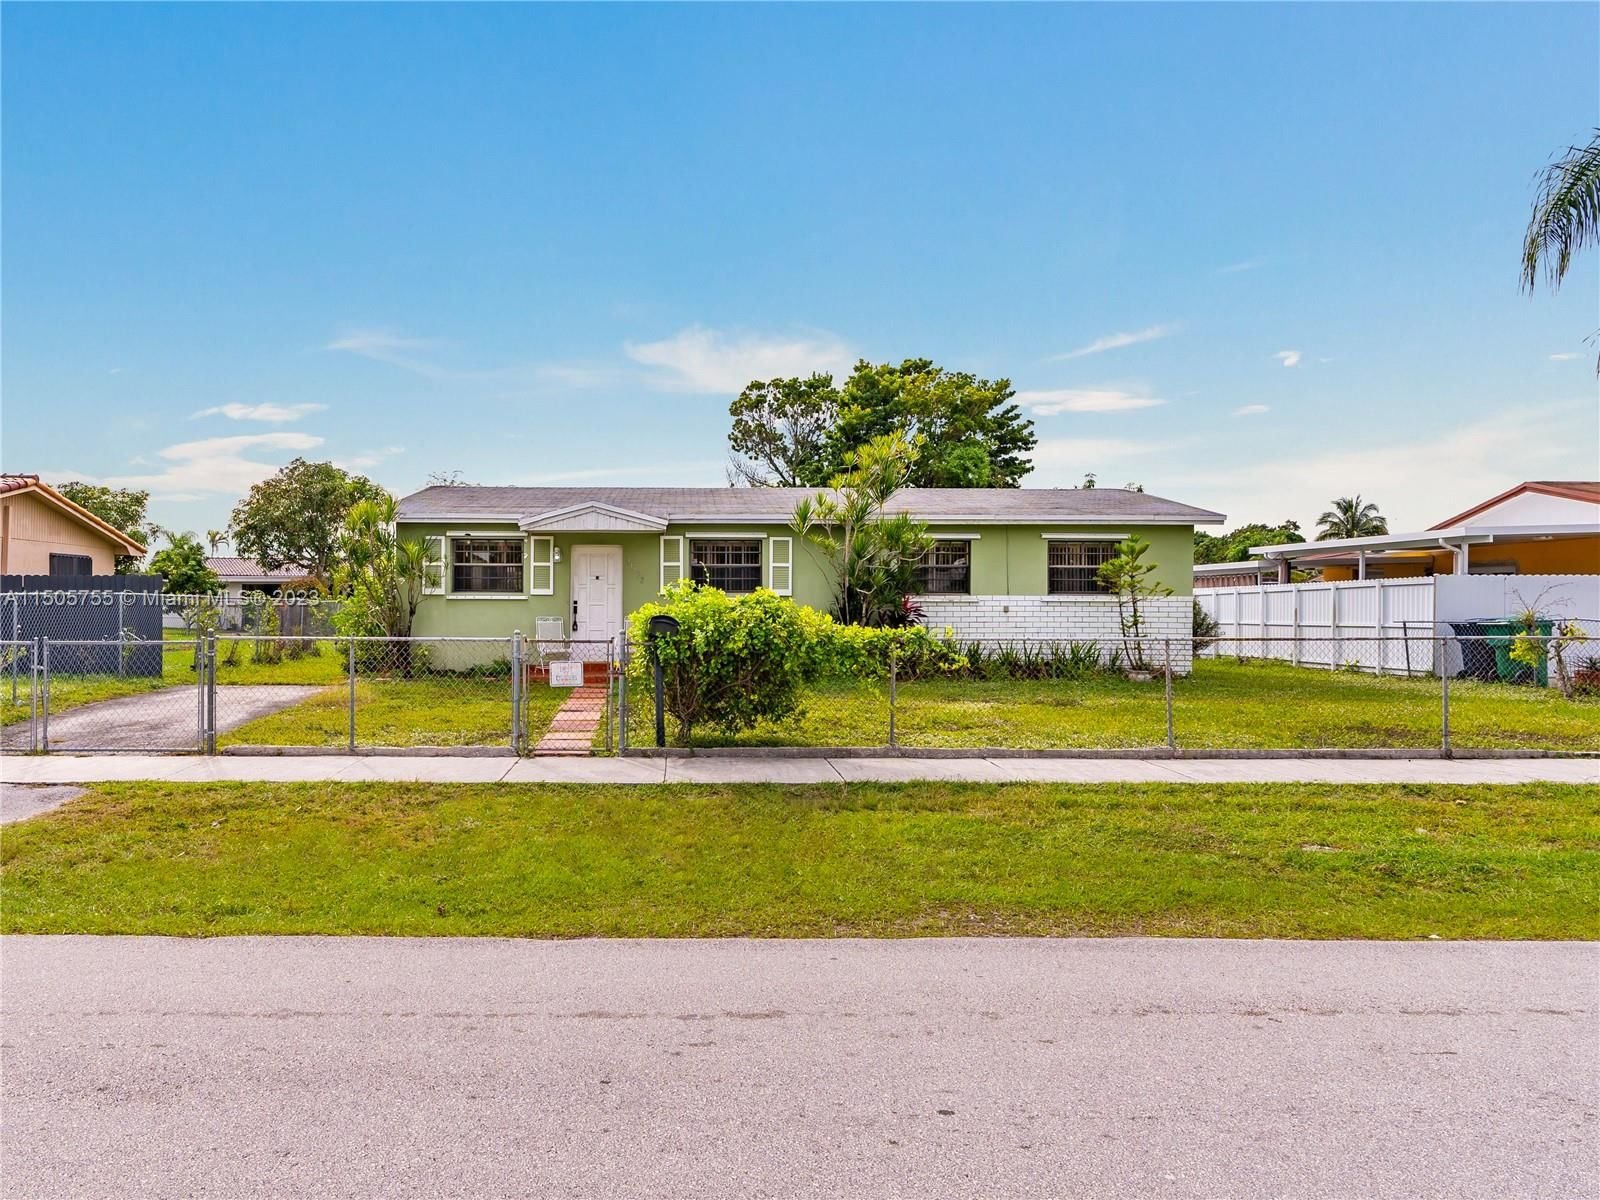 Real estate property located at 11932 180th St, Miami-Dade County, SOUTH MIAMI HGTS ADD B, Miami, FL